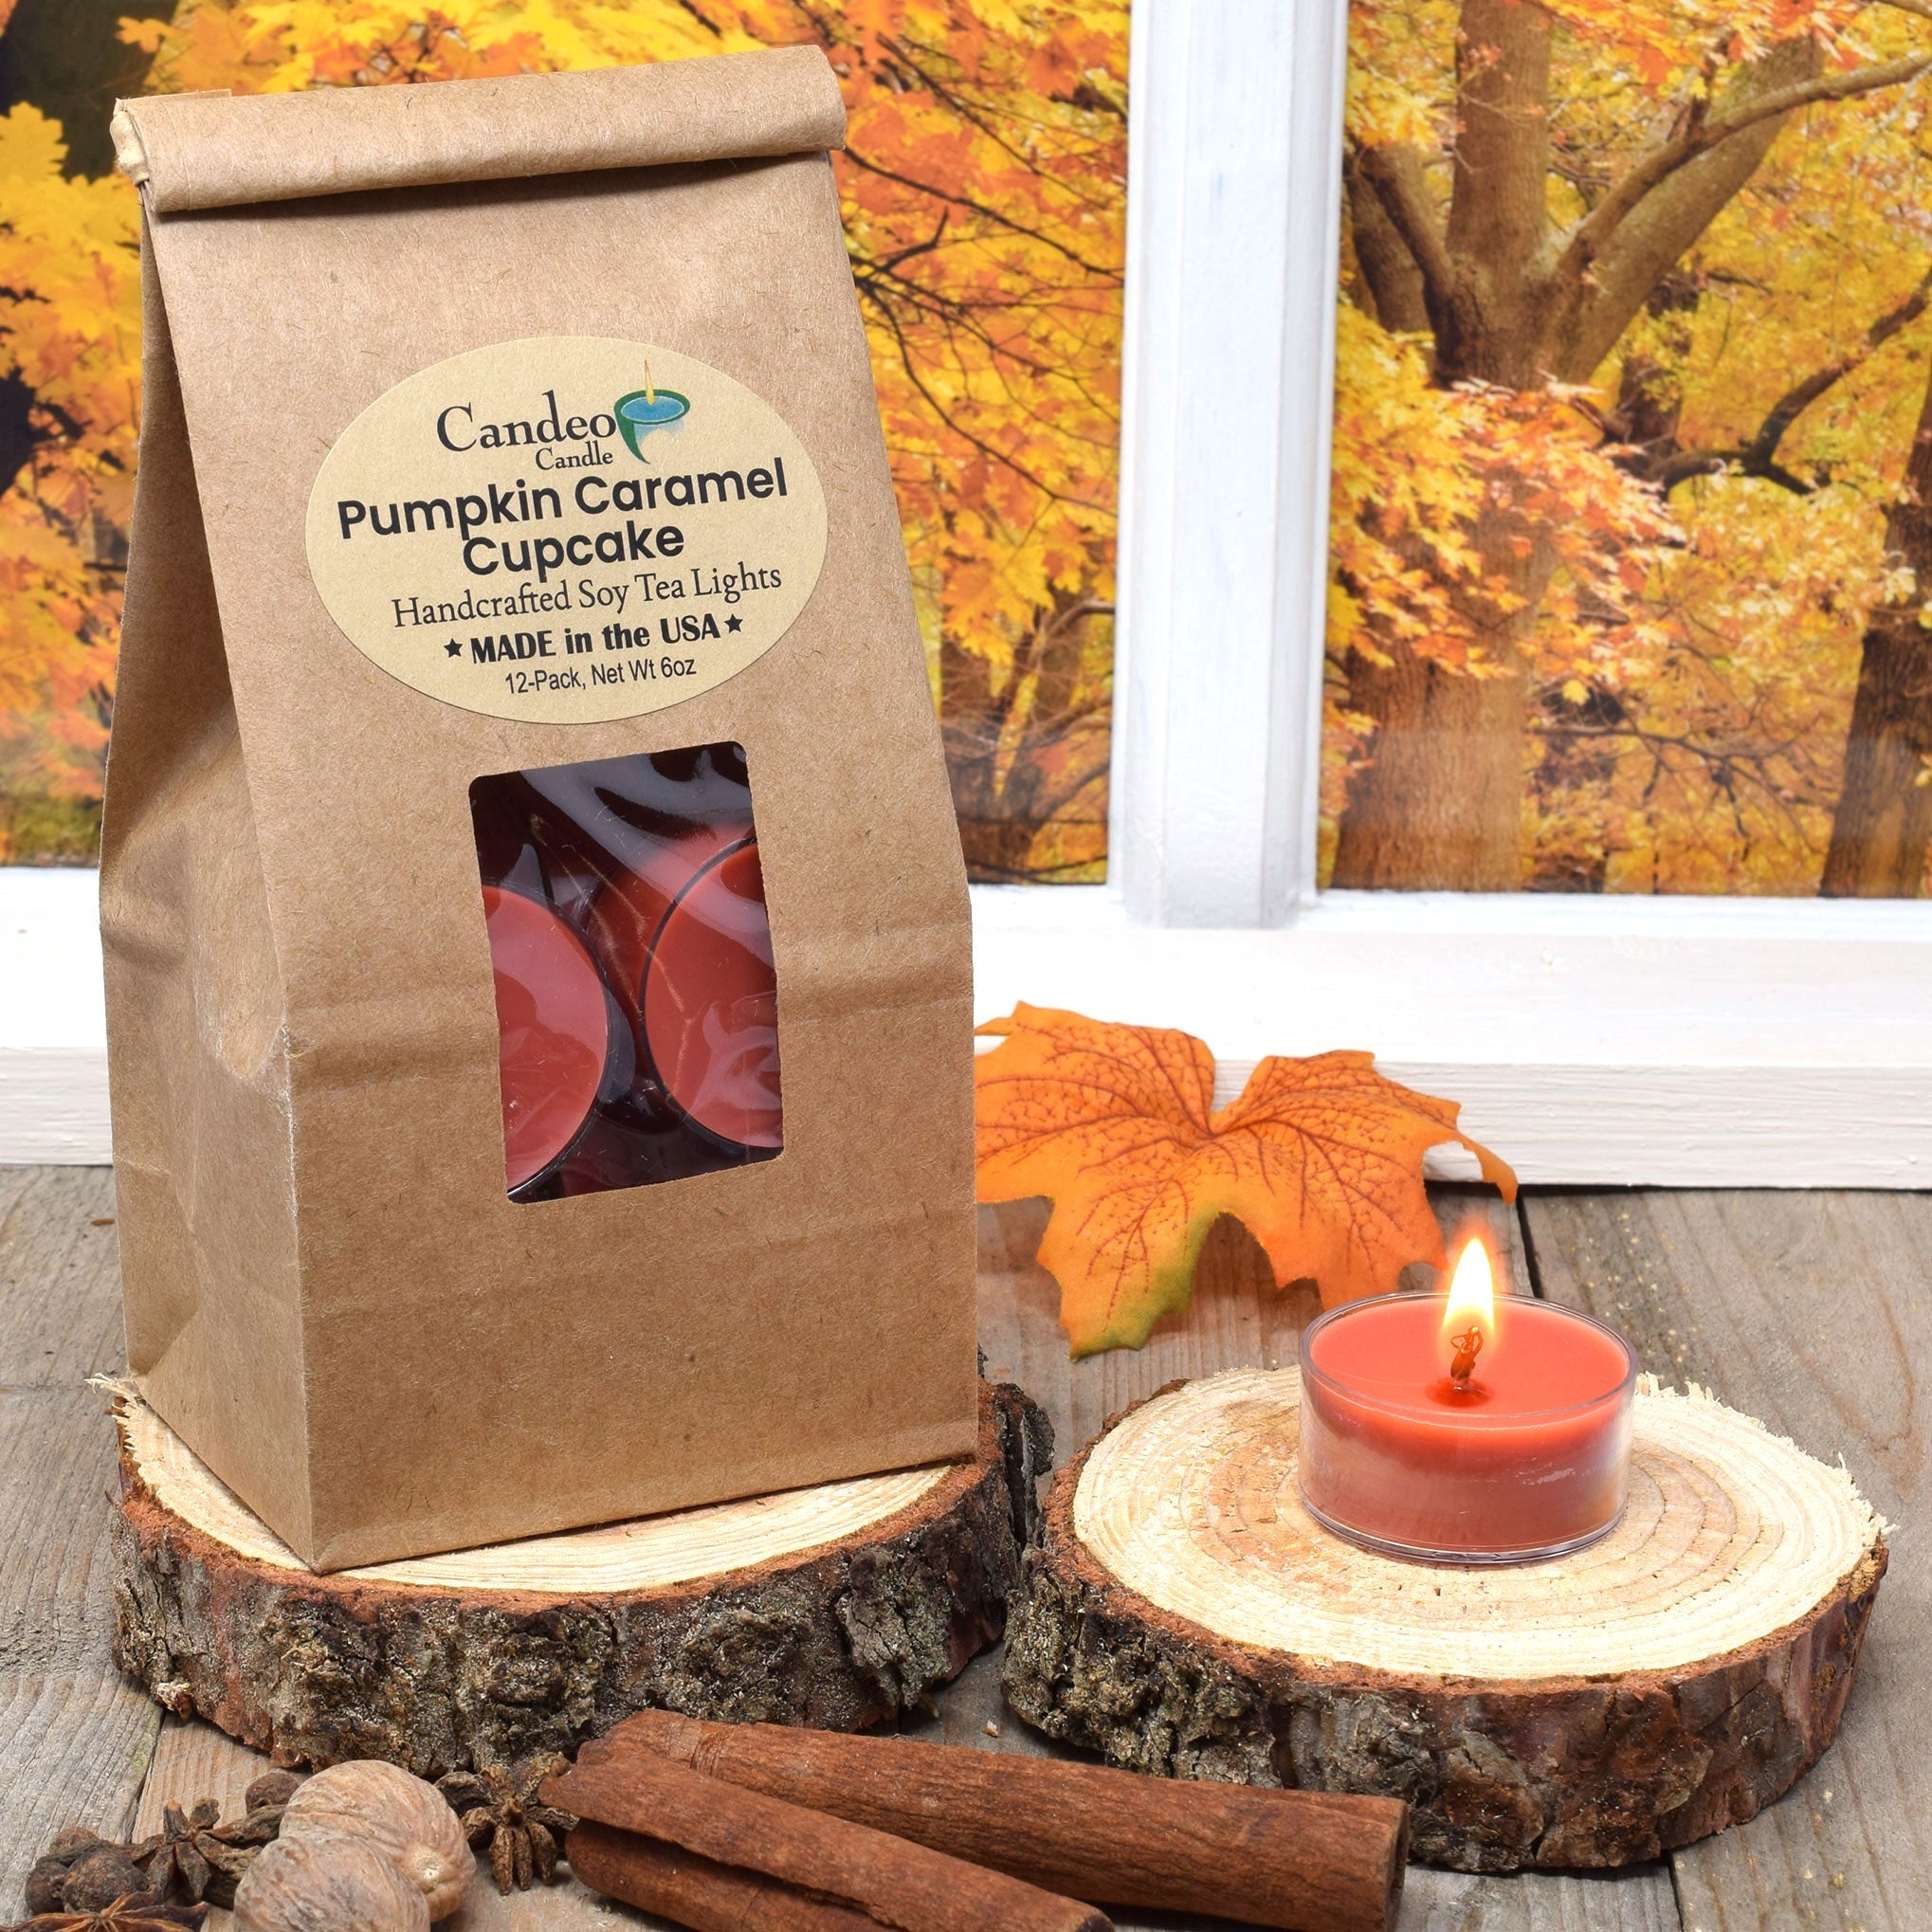 Pumpkin Caramel Cupcake, Soy Tea Light 12-Pack - Candeo Candle